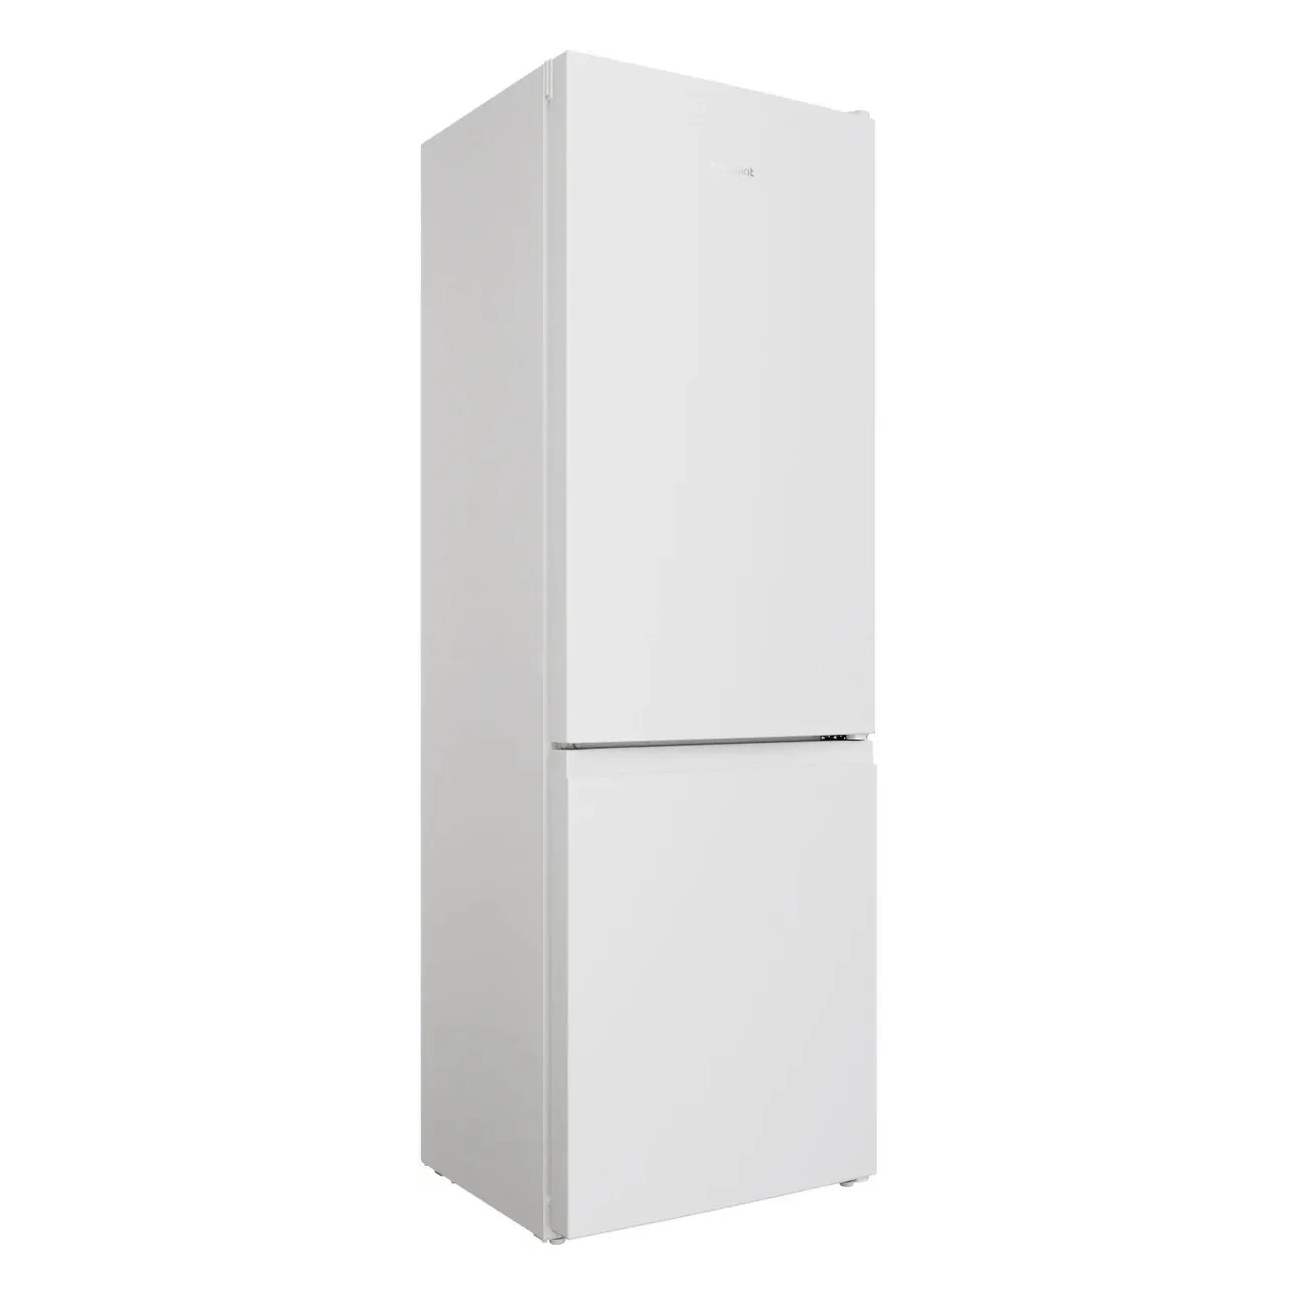 Холодильник HotPoint HT 4180 W белый, серебристый двухкамерный холодильник hotpoint hts 5200 s серебристый